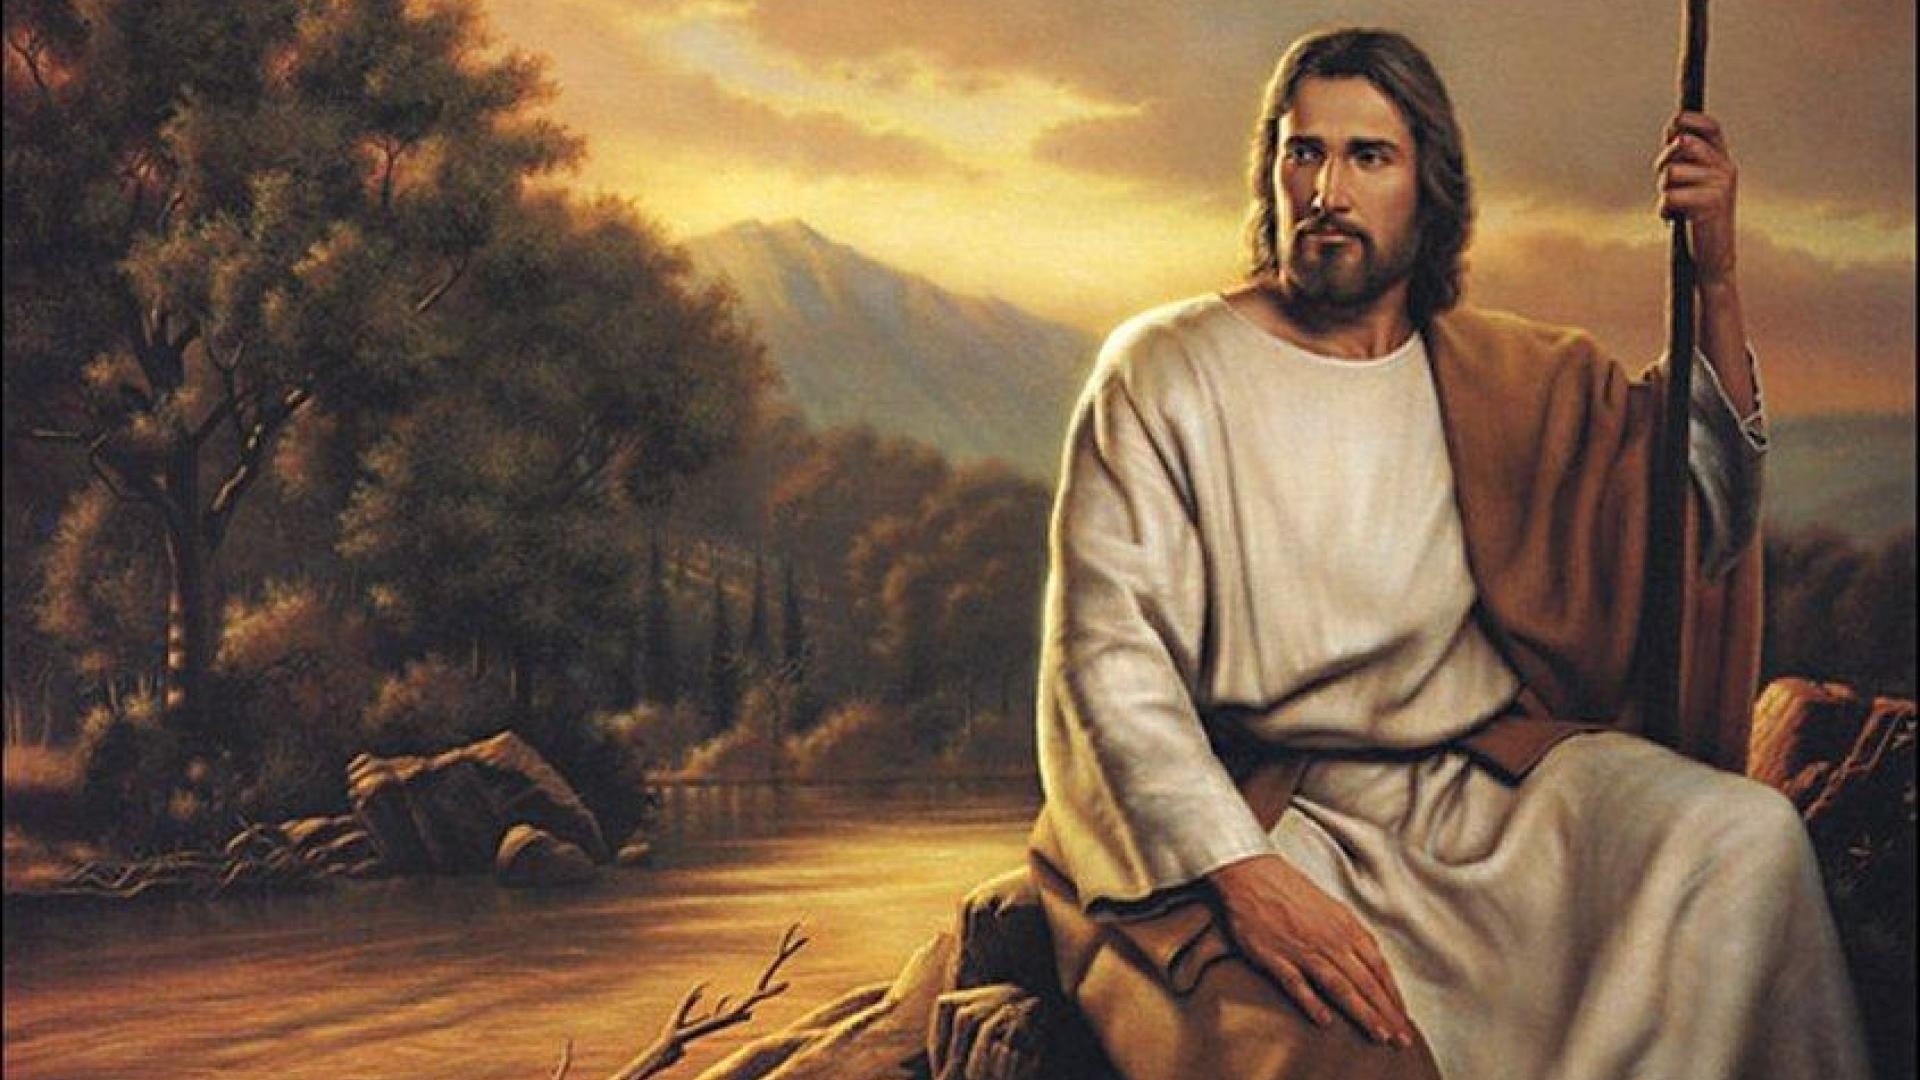 10 Most Popular Wallpaper Pictures Of Jesus FULL HD 1920×1080 For PC Desktop